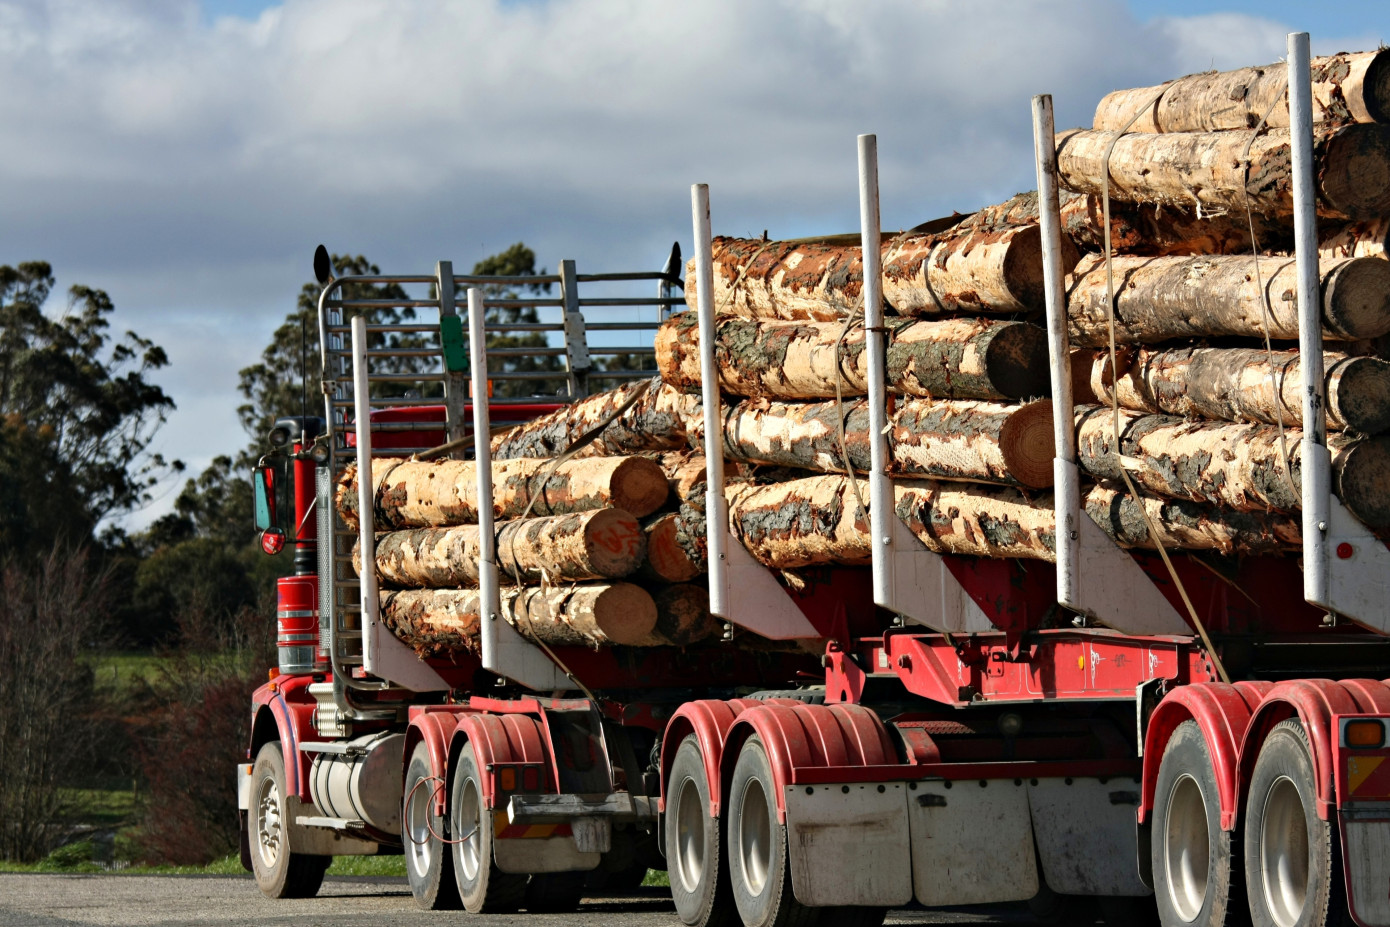 Log trade in Baltic Sea region declines